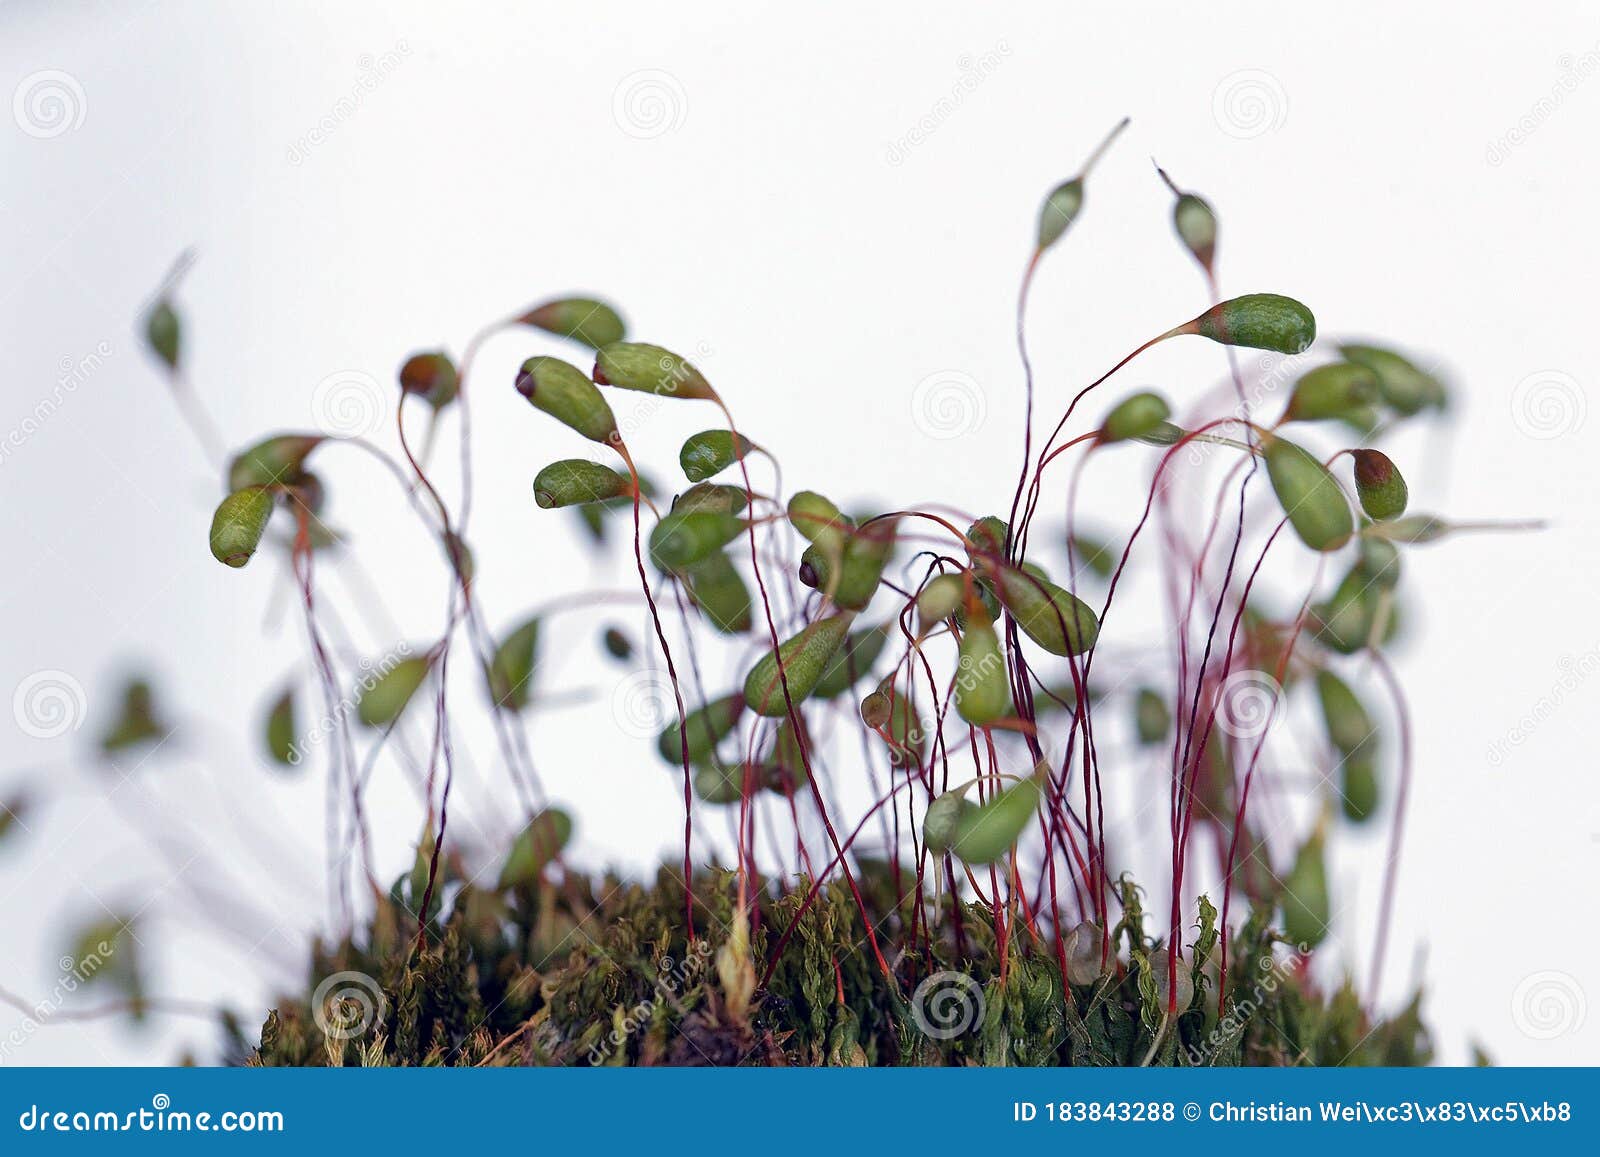 https://www.dreamstime.com/macro-photo-sporophytes-bryum-moss-macro-photo-sporophytes-bryum-moss-white-background-image183843288